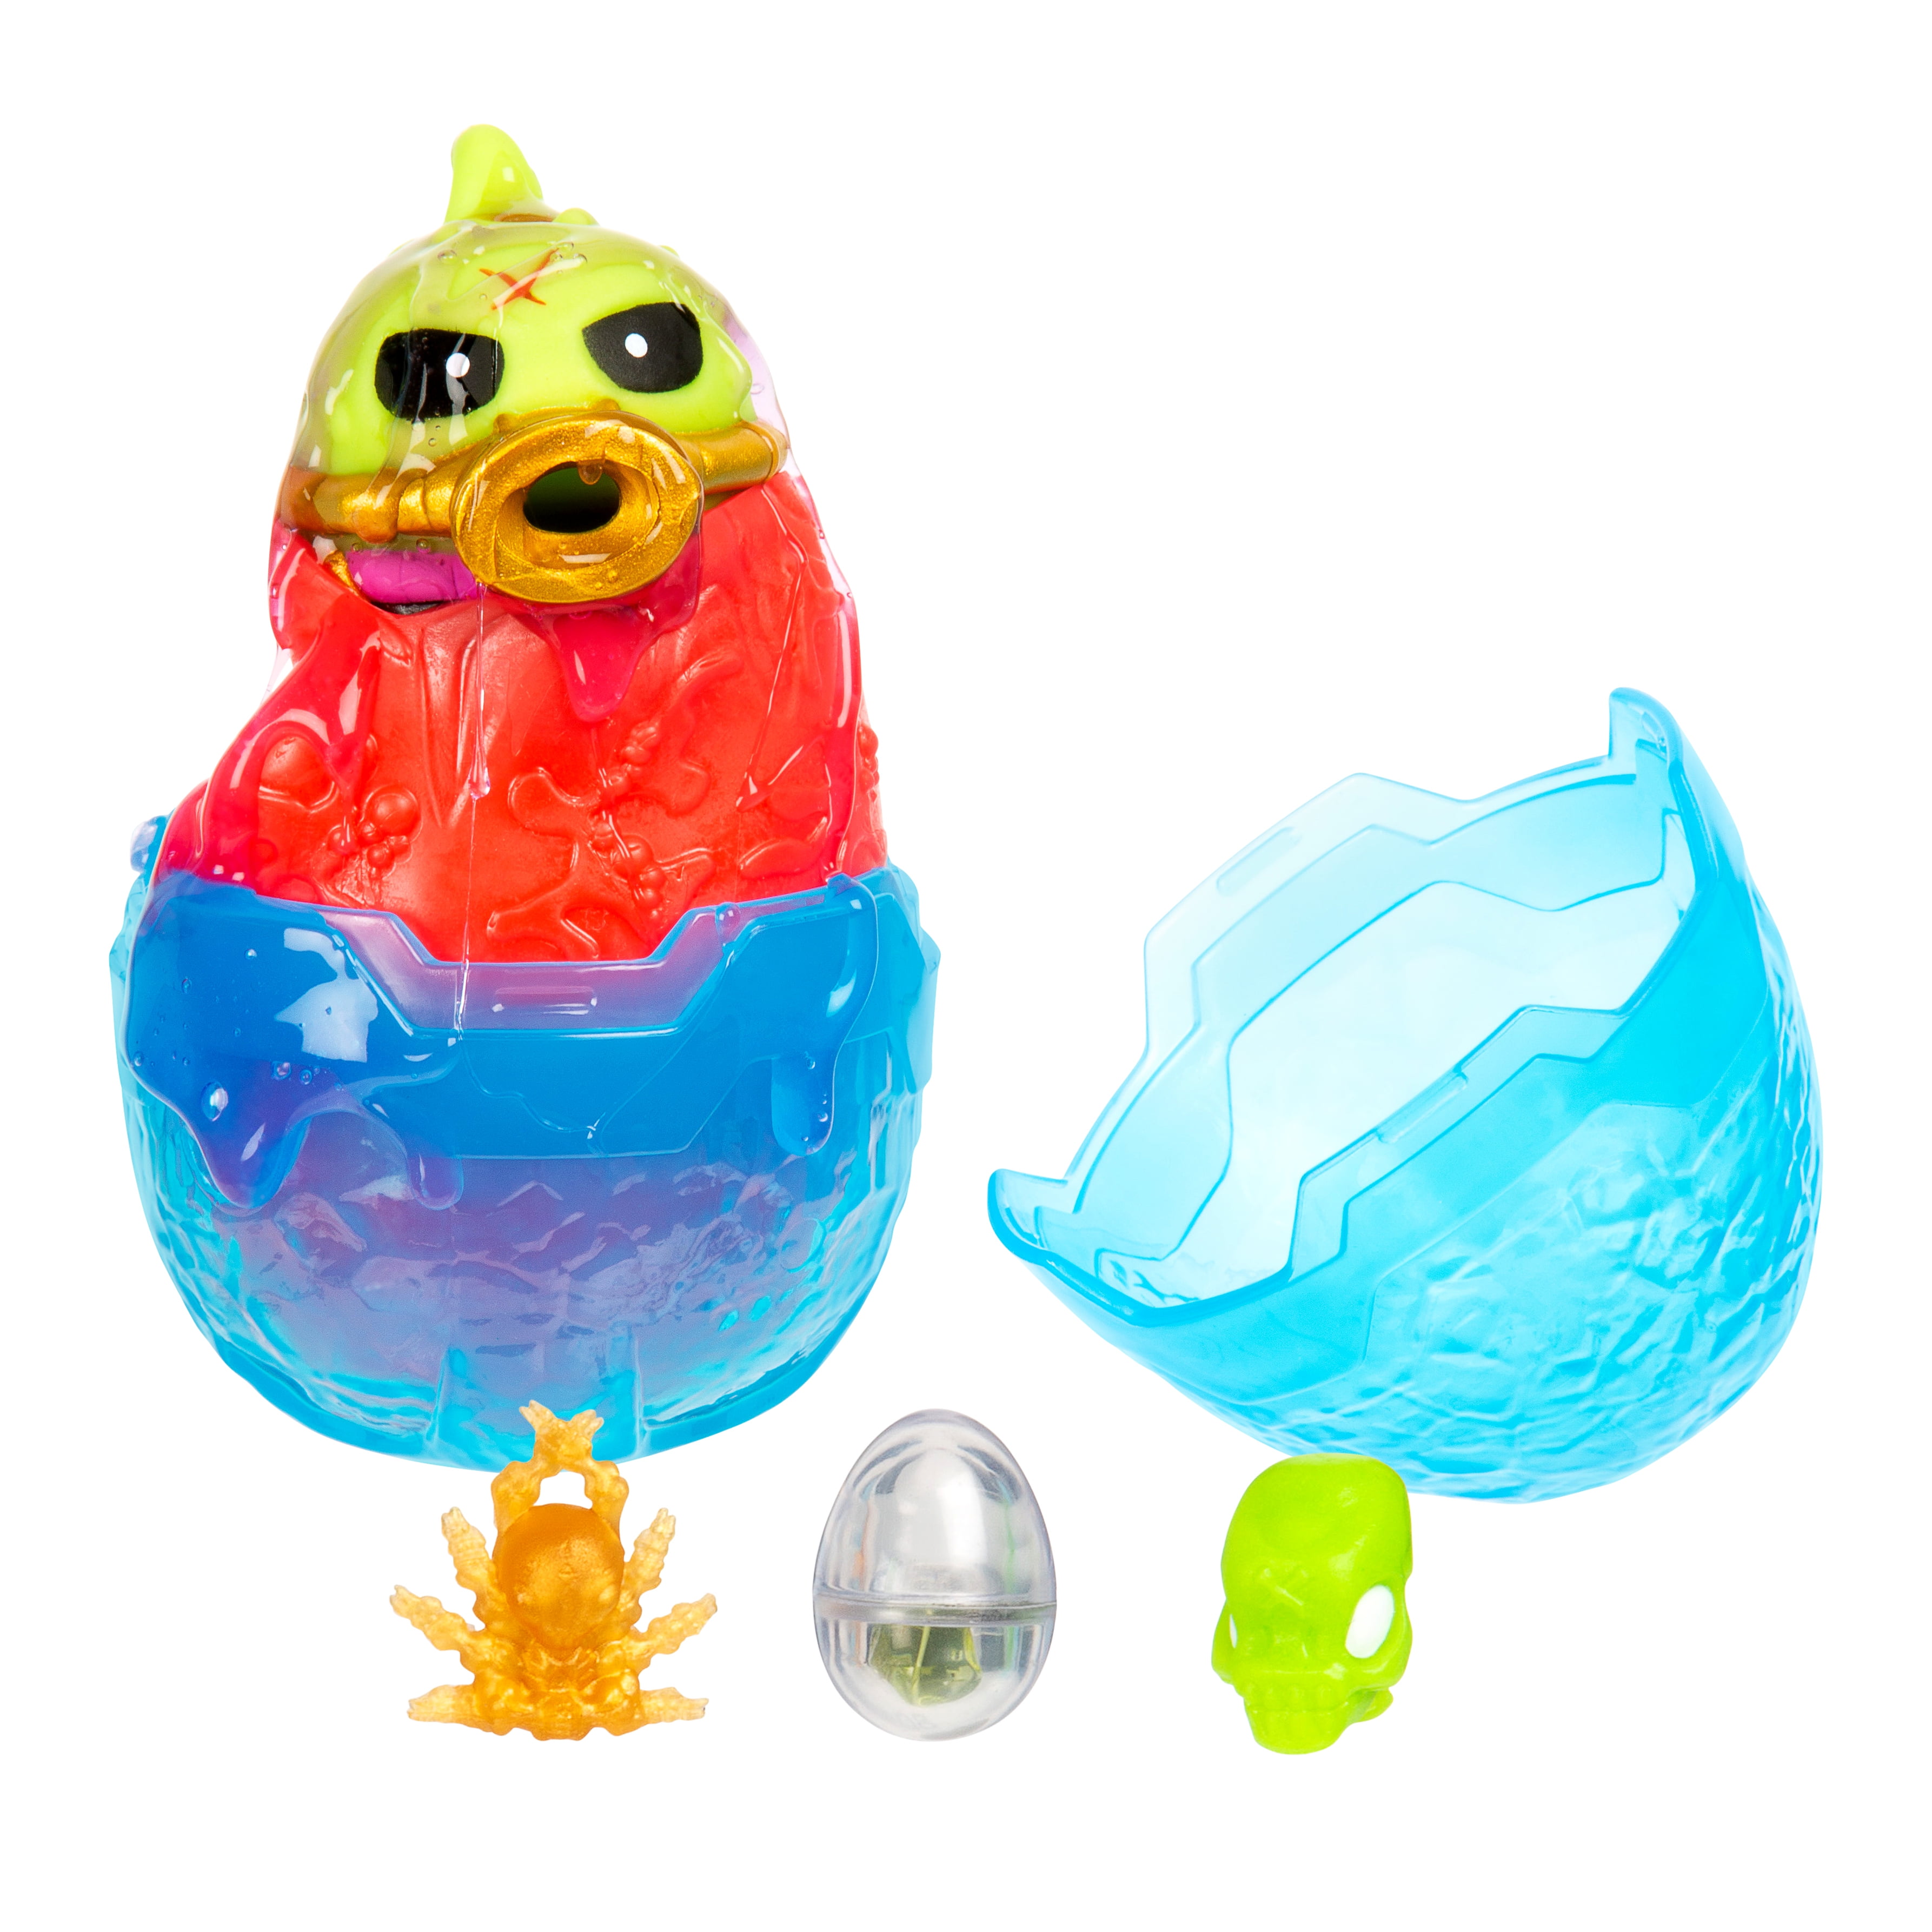 Treasure-X Aliens Ooze Egg, with Collectible Figure - Walmart.com